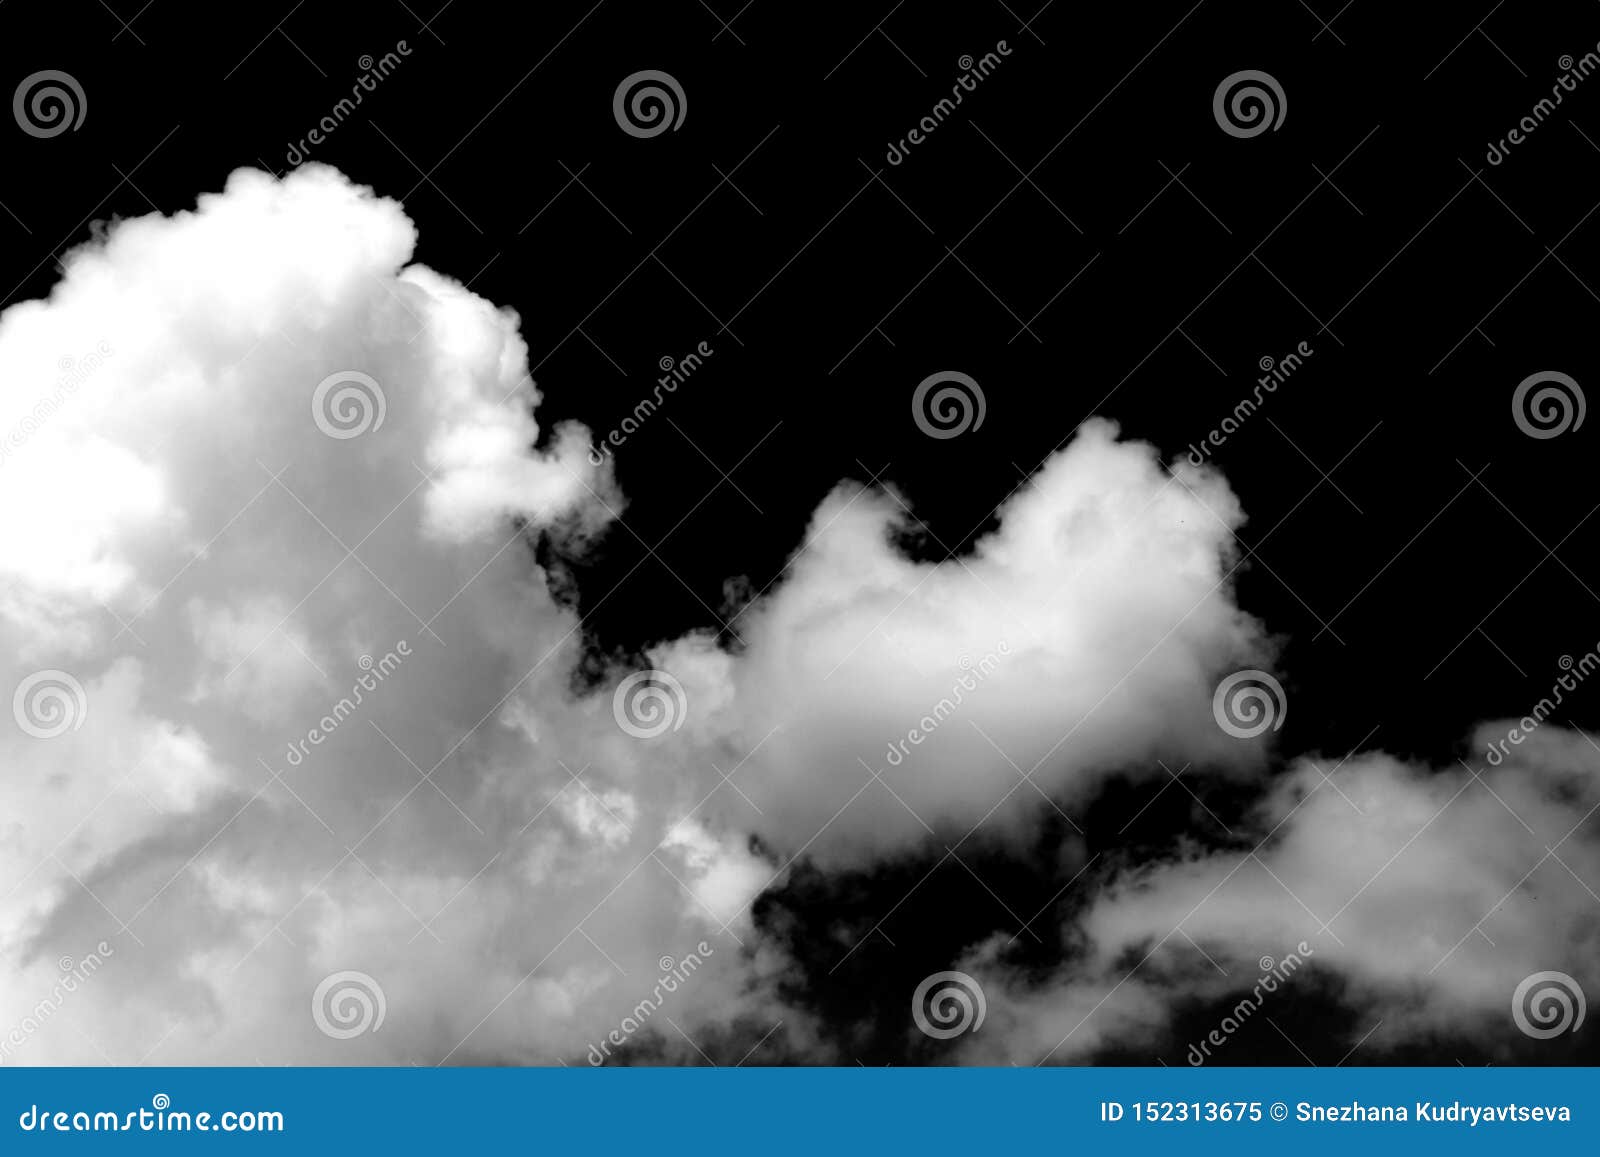 Cloud Sky Nature Dark Bw iPhone Wallpapers Free Download